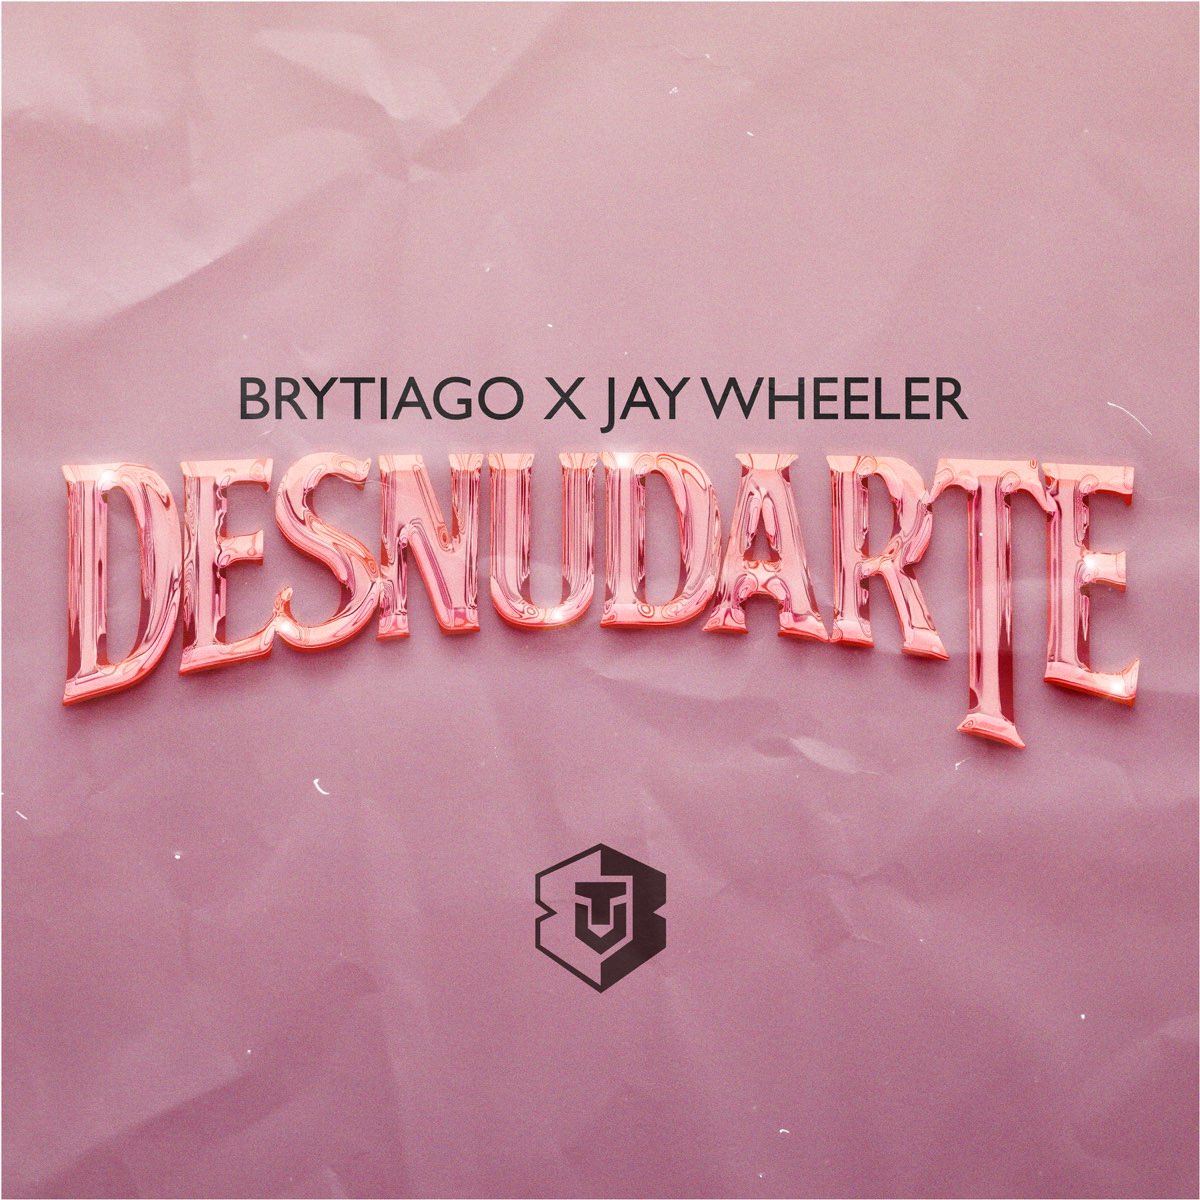 camarera miembro interior Desnudarte - Single de Brytiago & Jay Wheeler en Apple Music